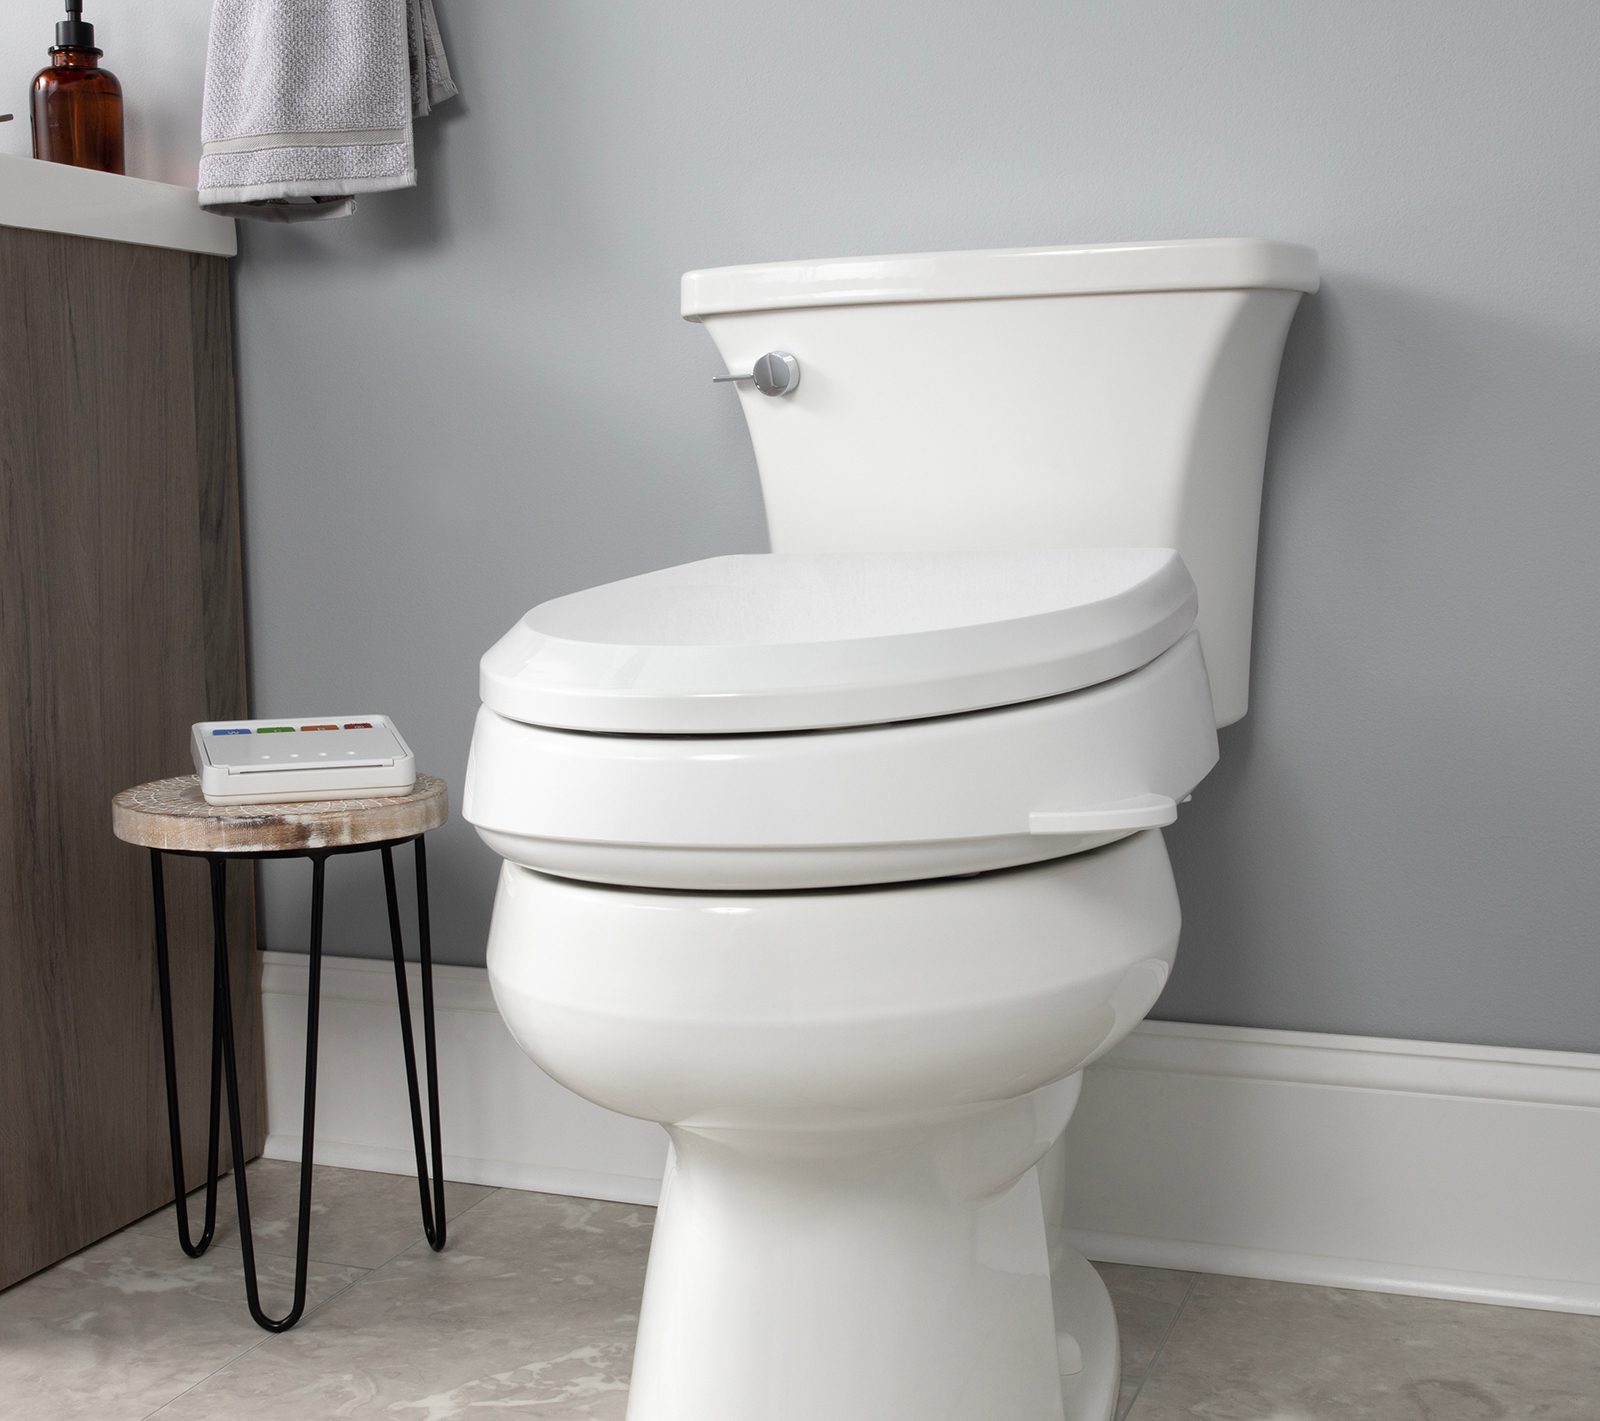 Toilet seat, Interior design, Material property, Wood